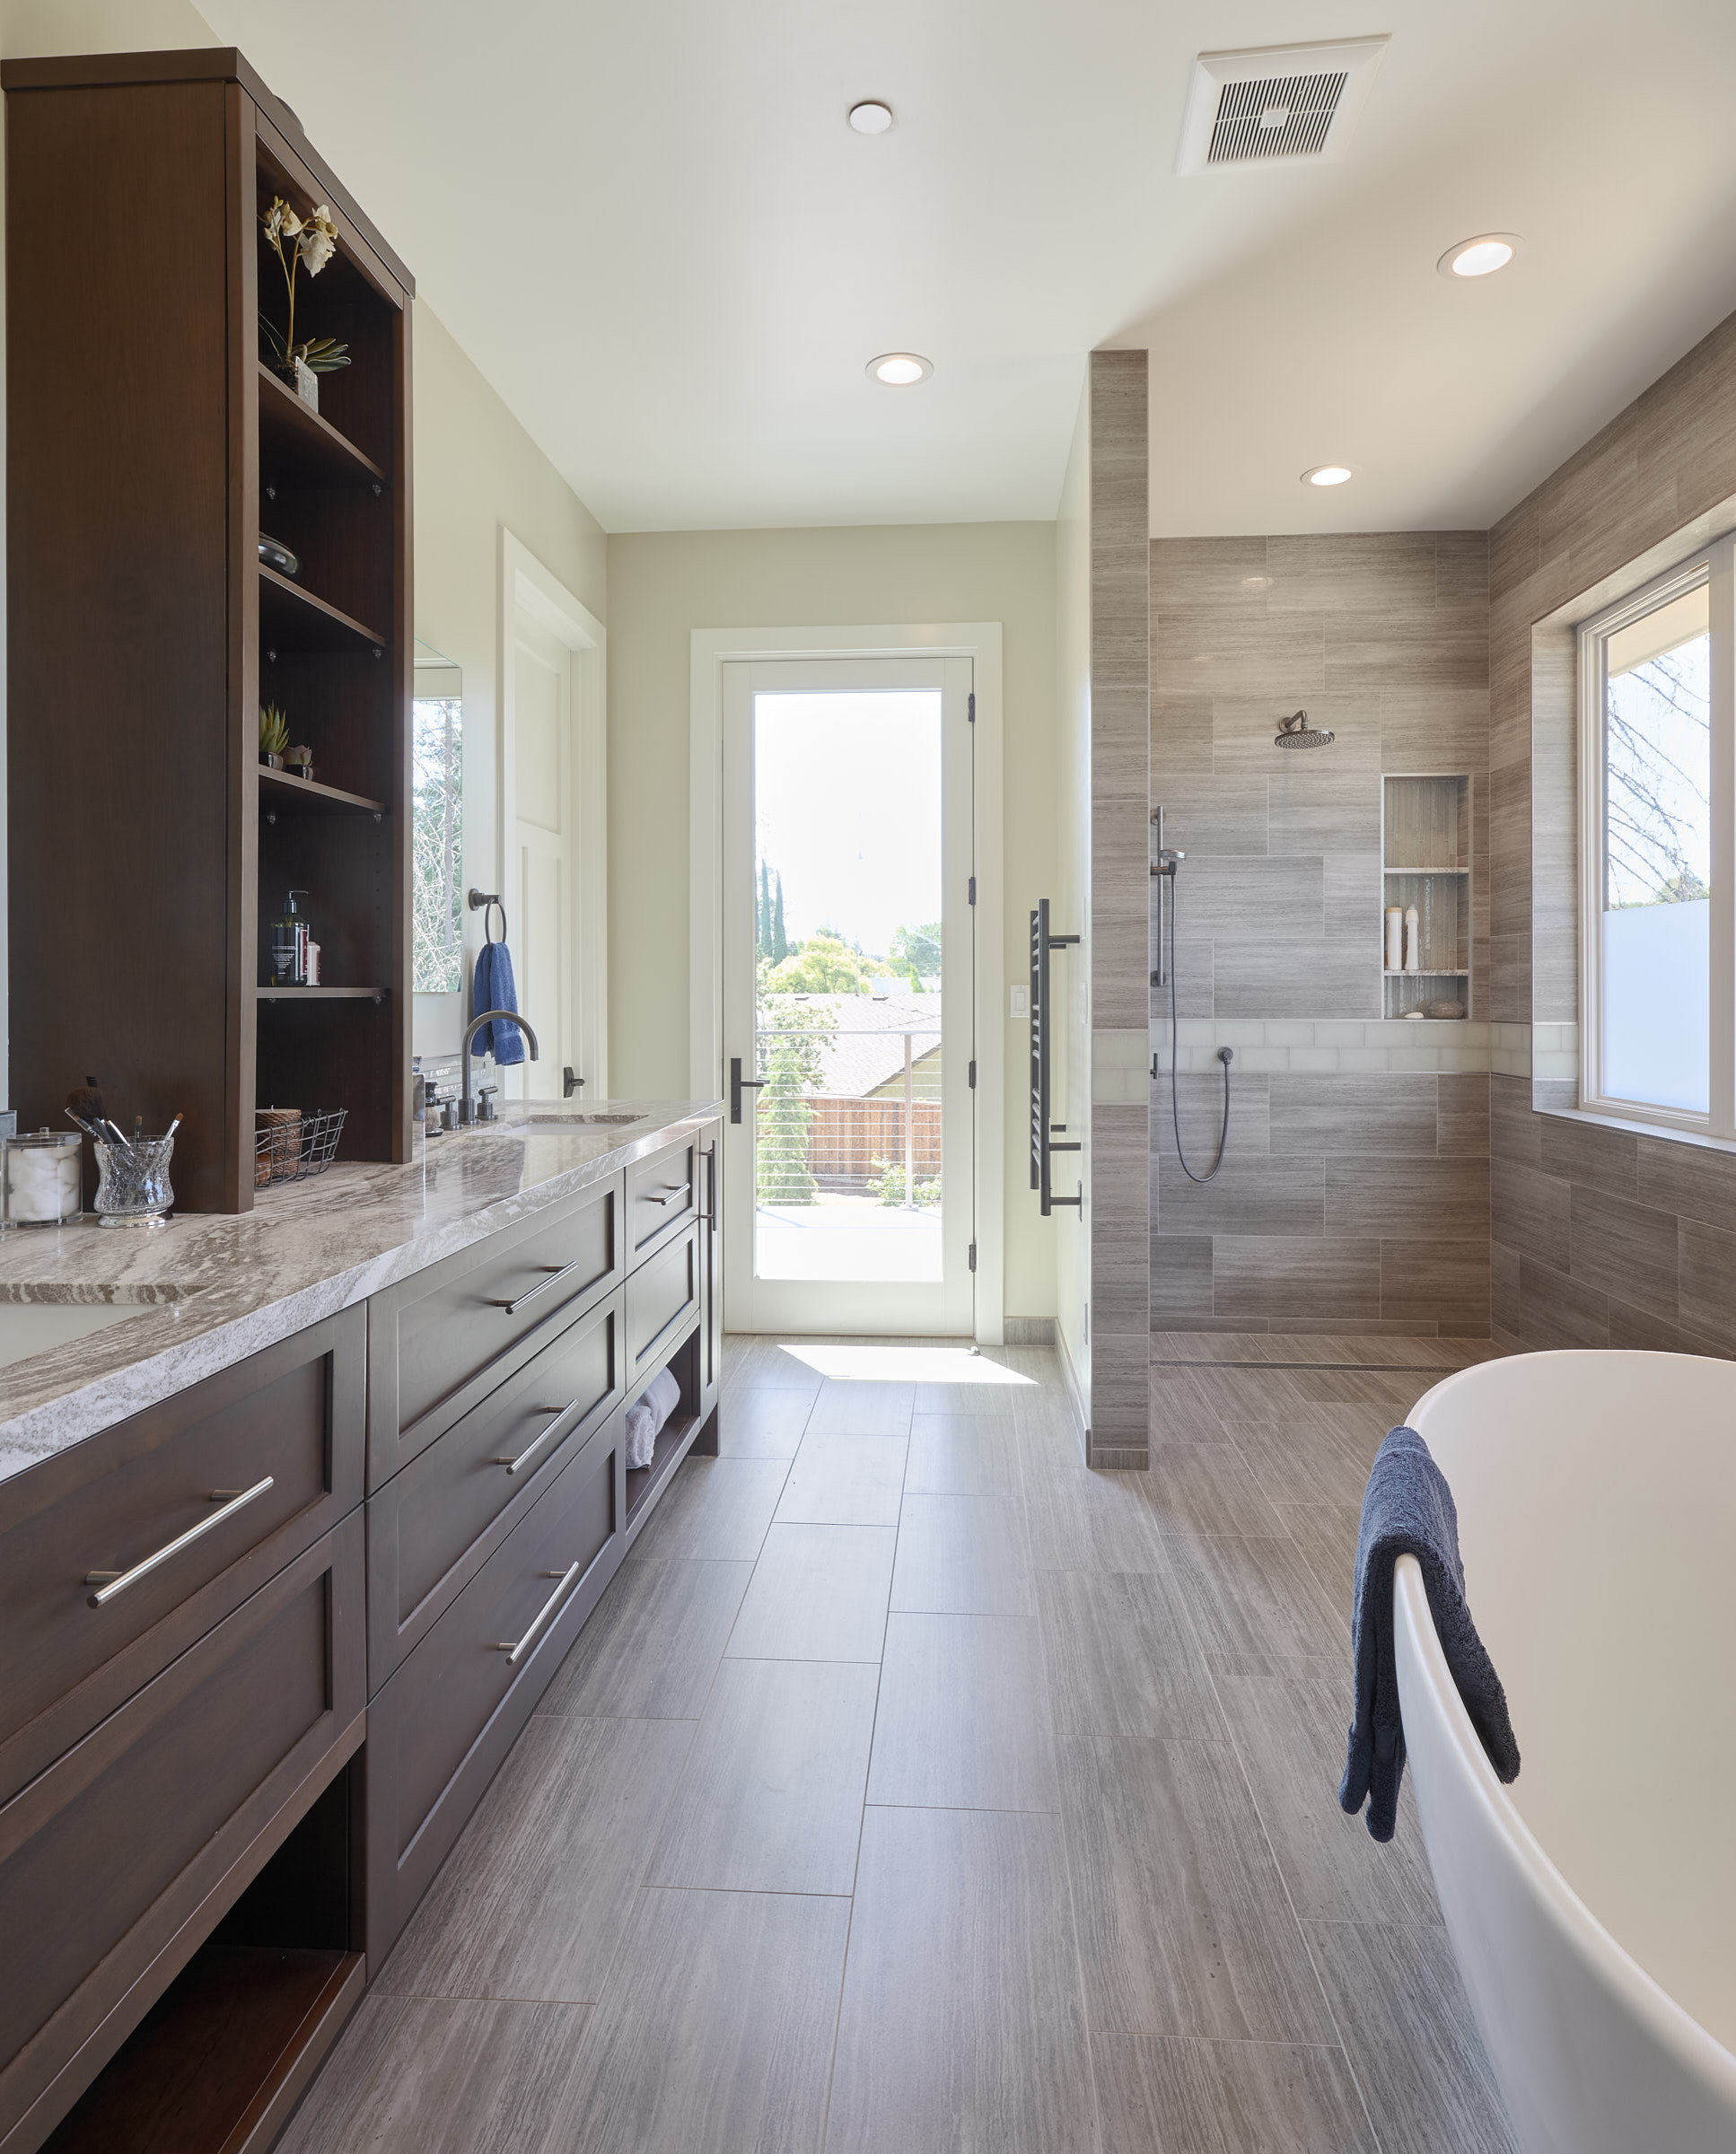 Choosing the Right Bathroom Floor Tile Grout - Bauscher Construction